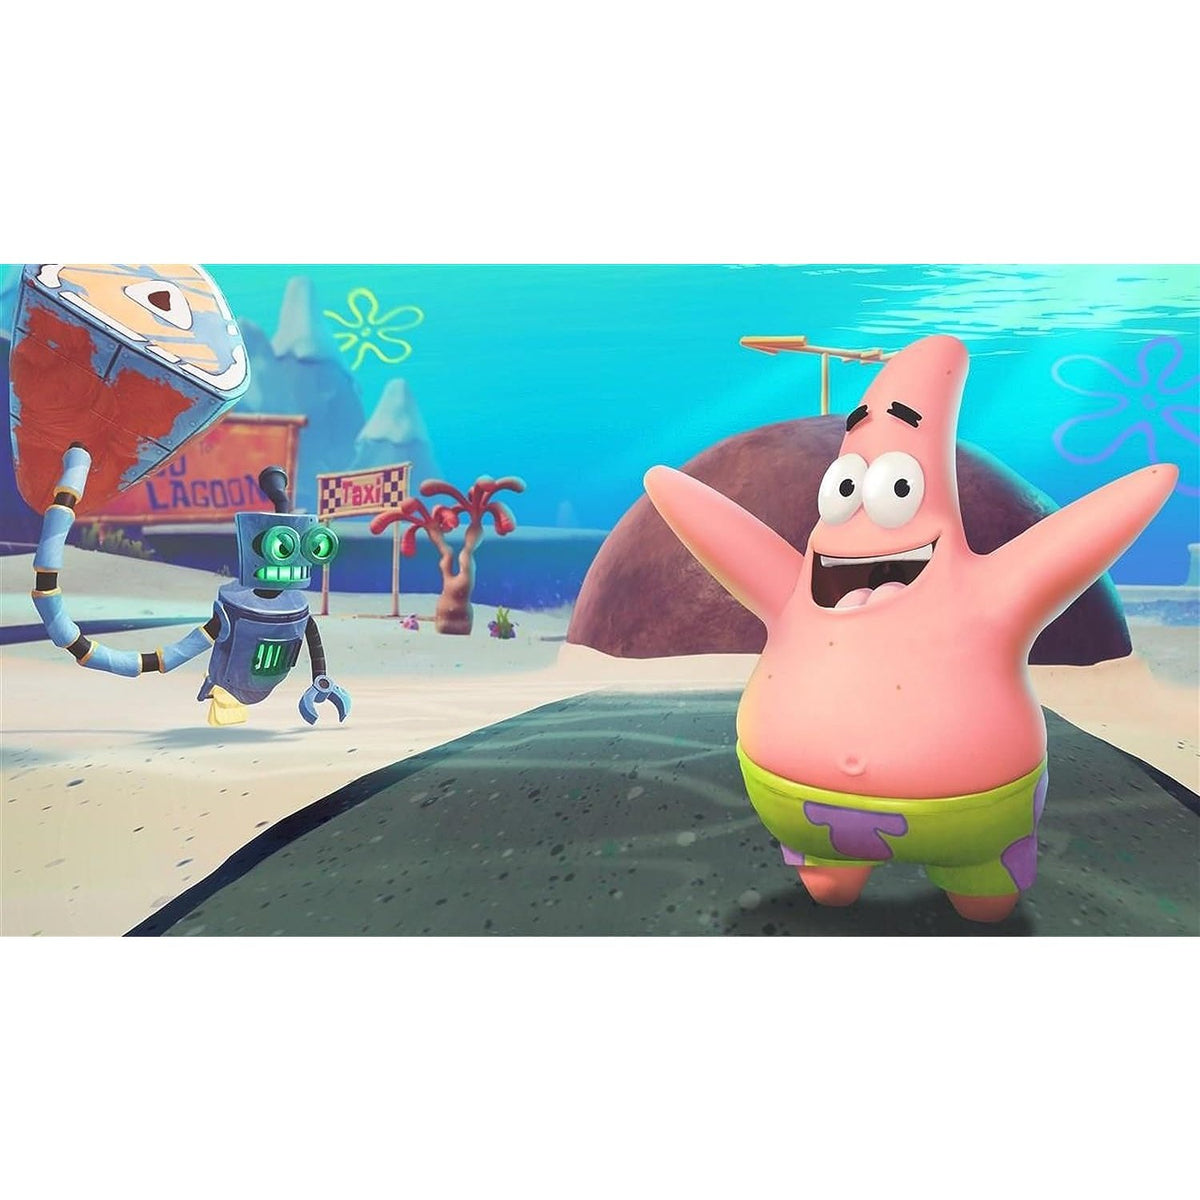 SpongeBob Squarepants: Battle for Bikini Bottom - Rehydrated Sony PlayStation 4